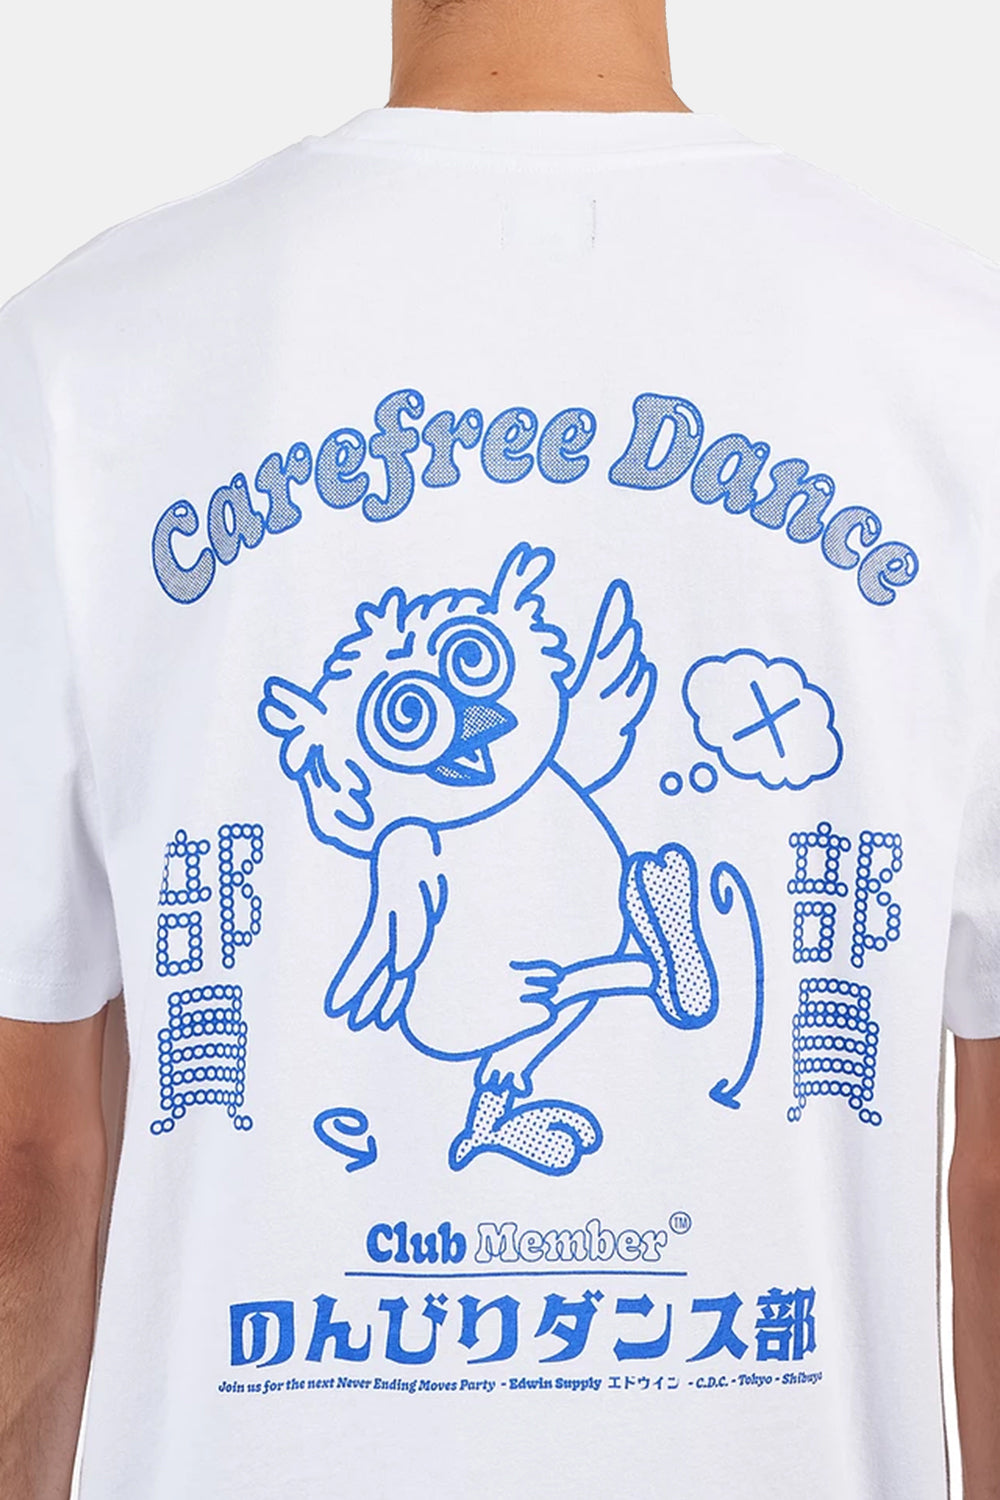 Edwin Carefree Dance Club T-Shirt (Washed White)